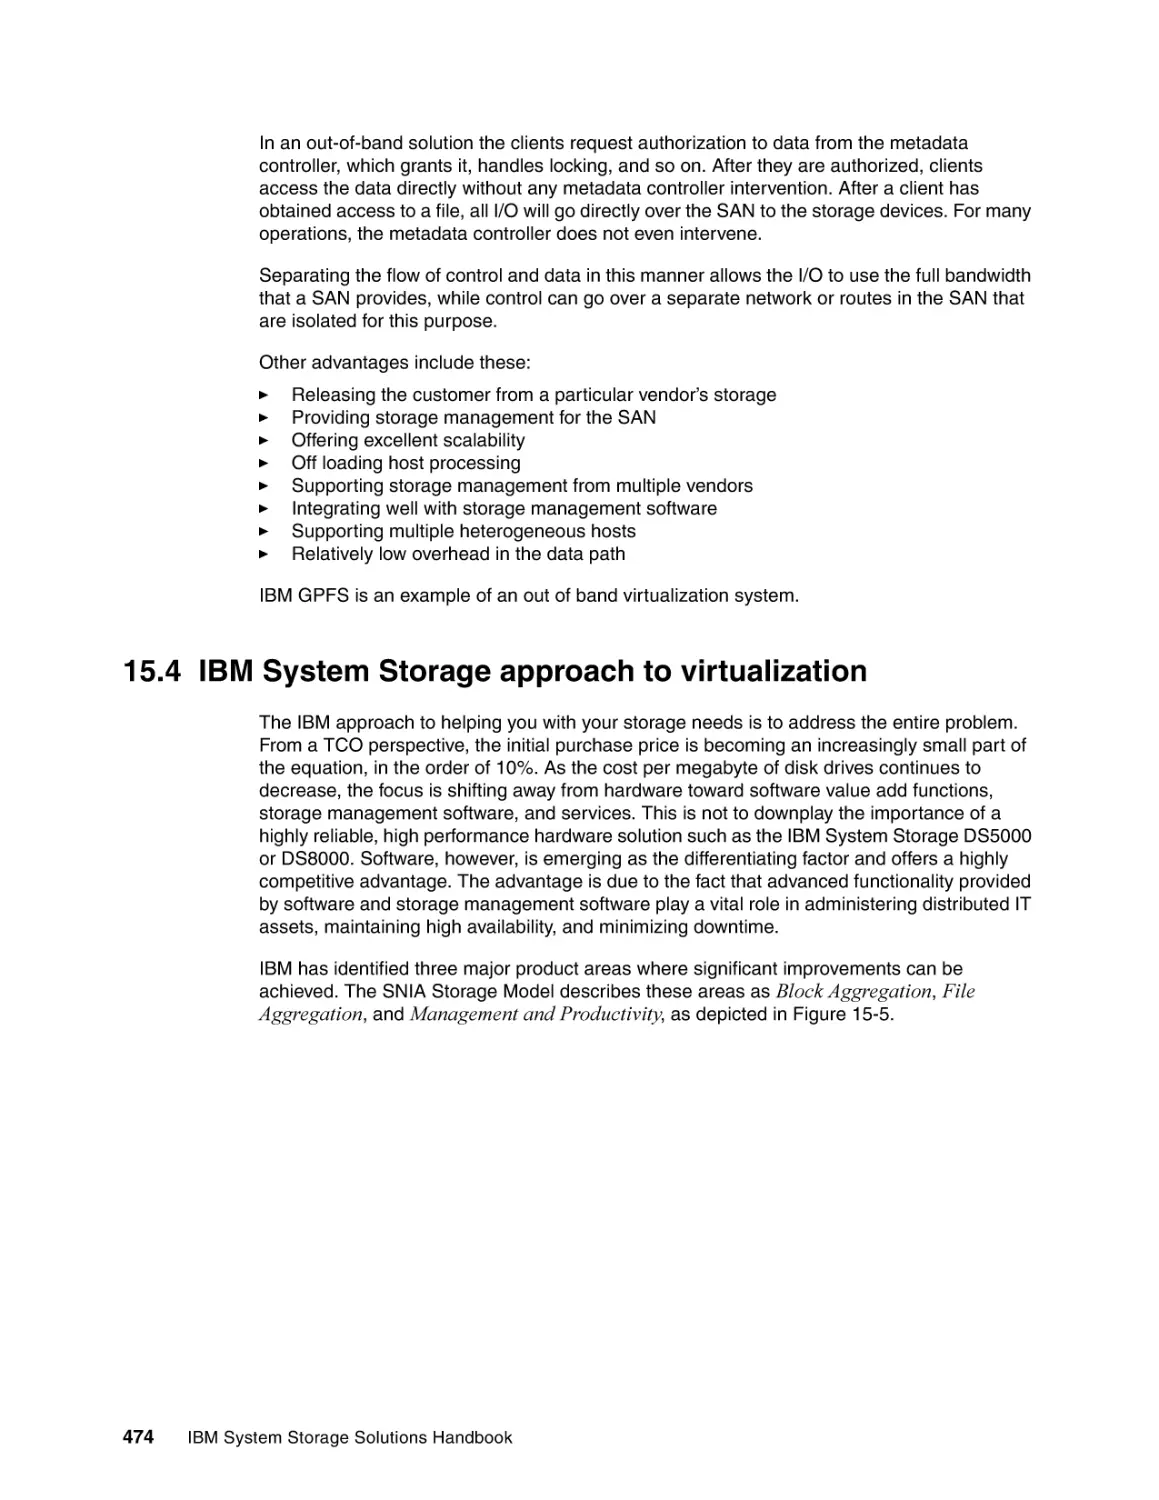 15.4 IBM System Storage approach to virtualization